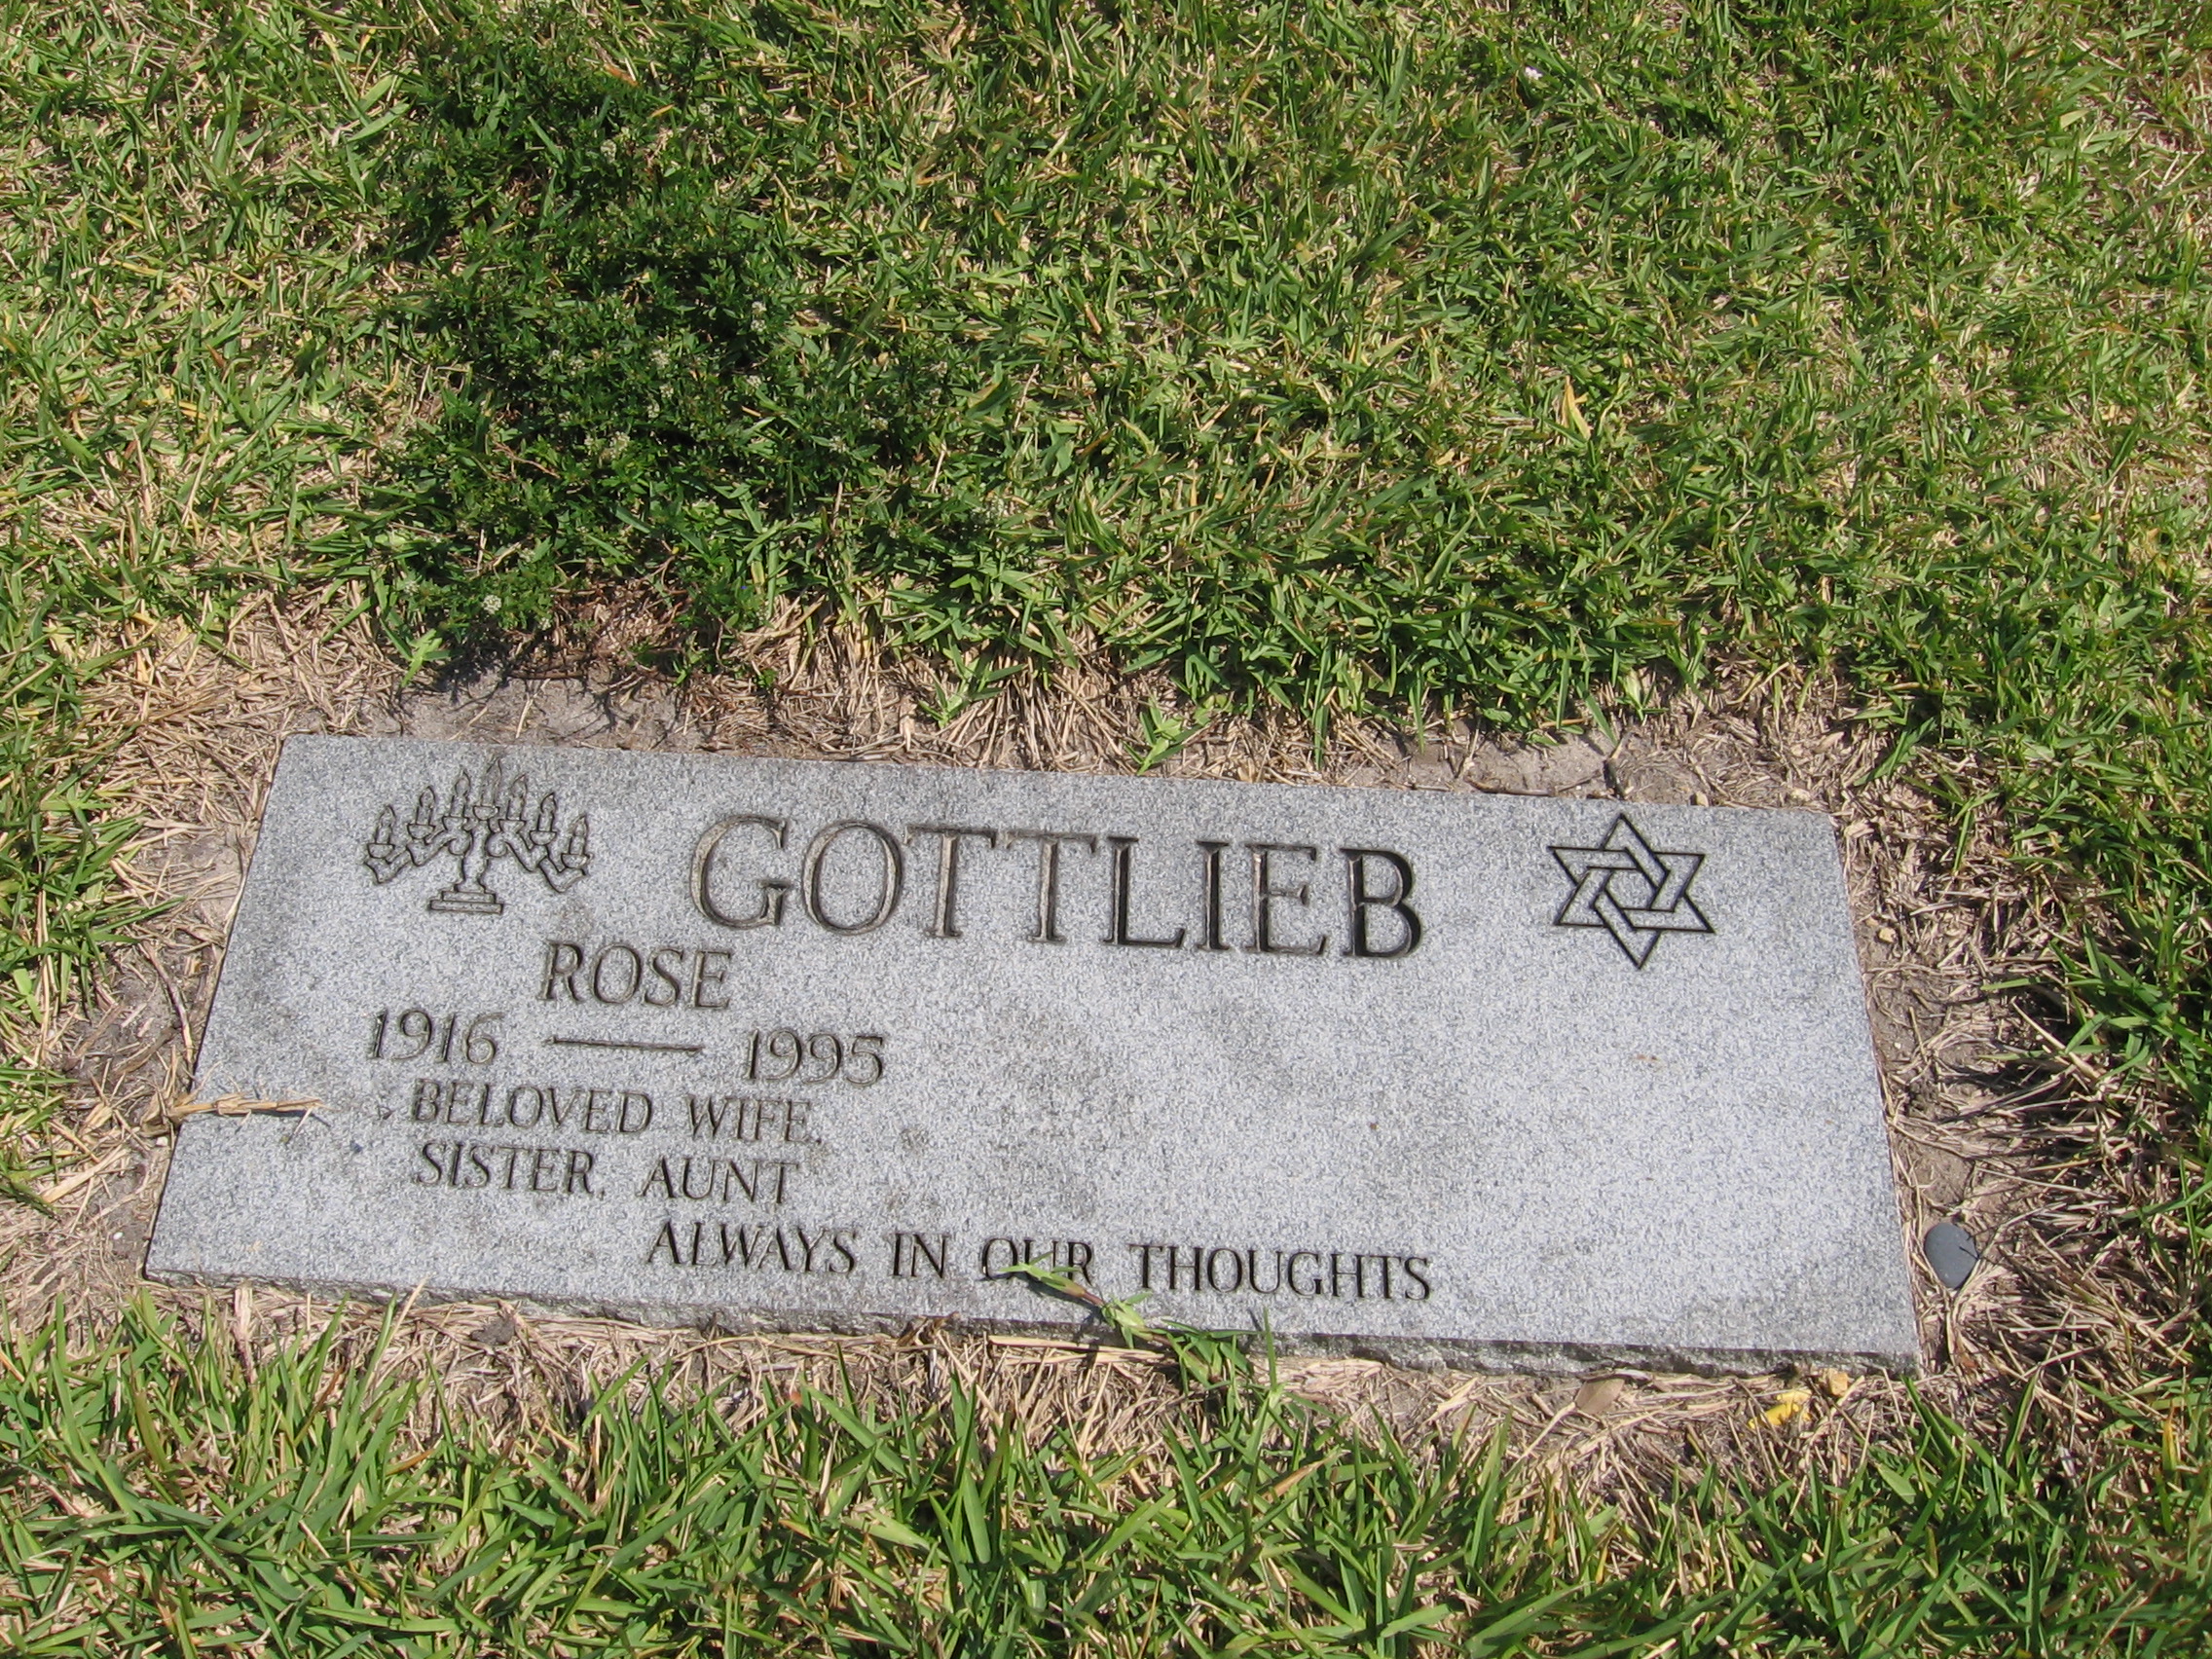 Rose Gottlieb